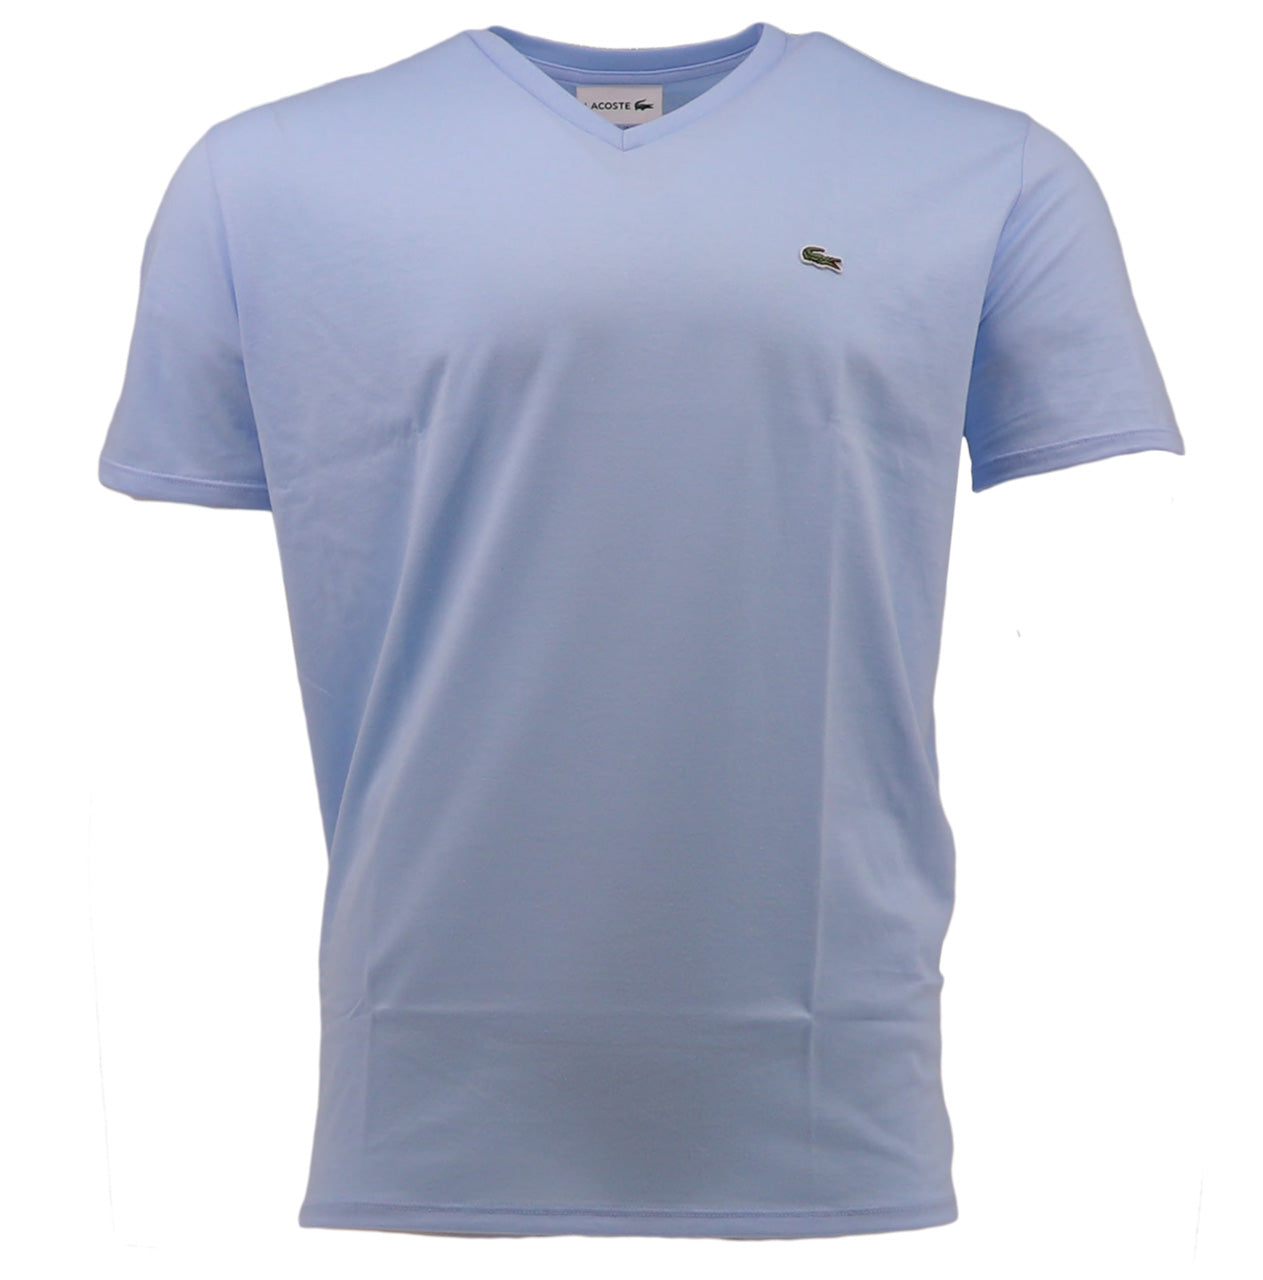 light blue v-neck tee shirt